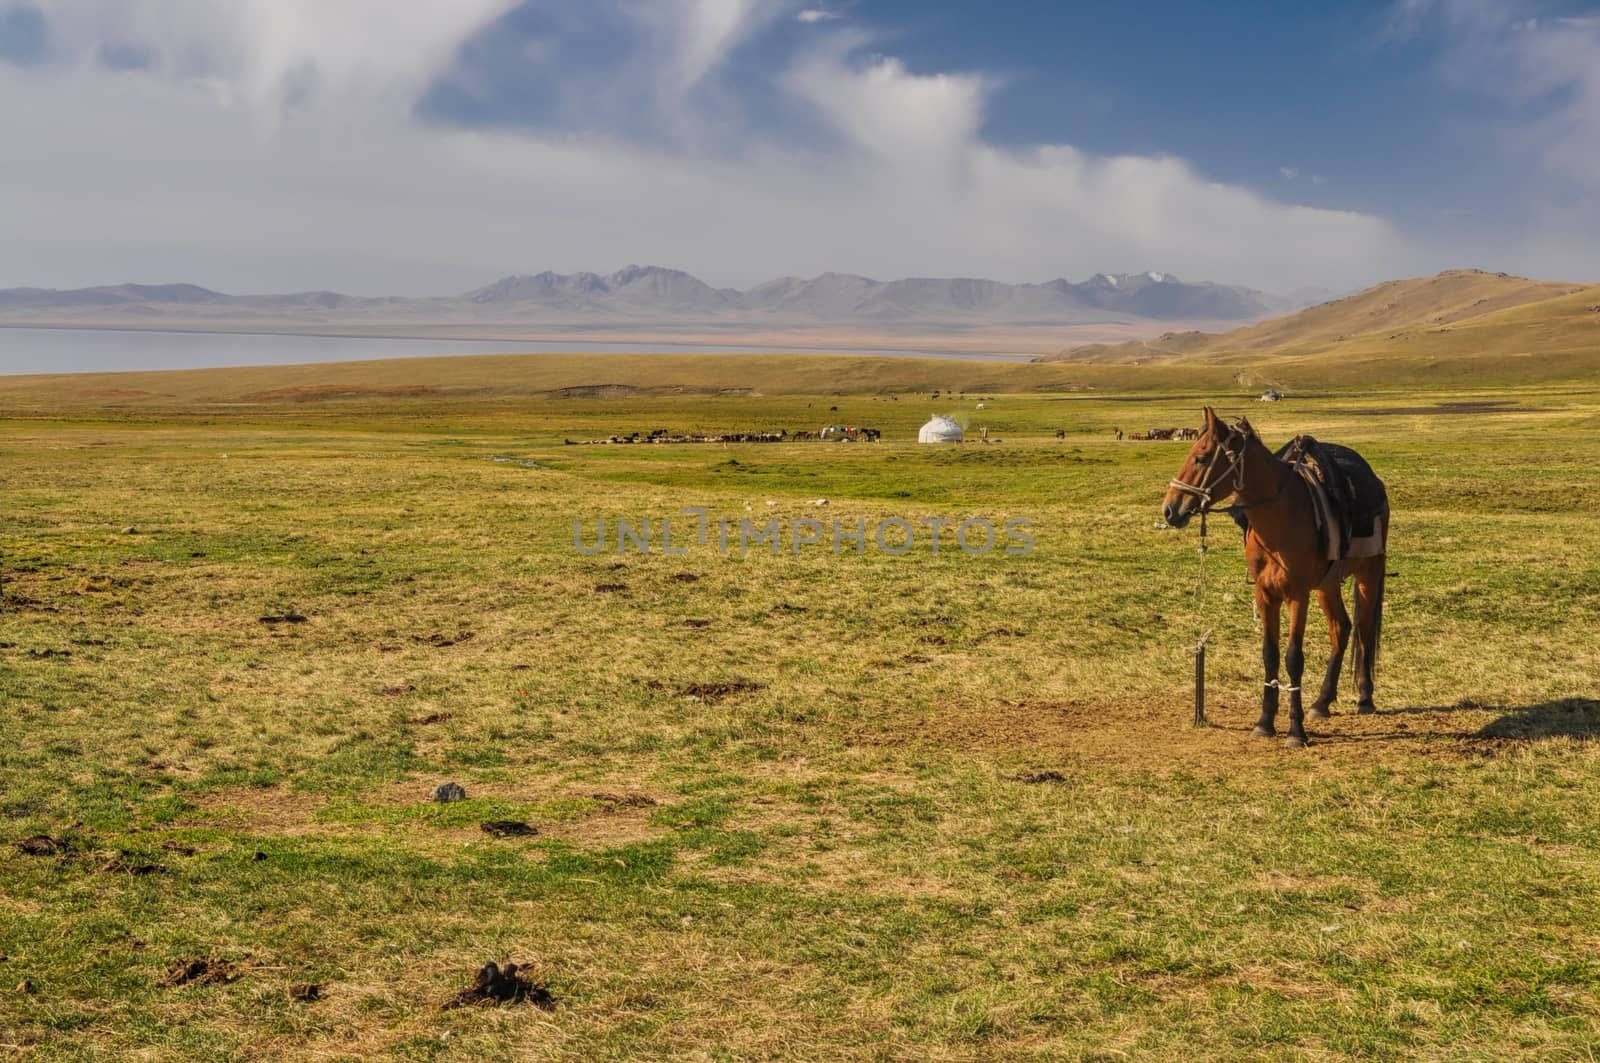 Horse on scenic grassy mountainous landscape in Kyrgyzstan